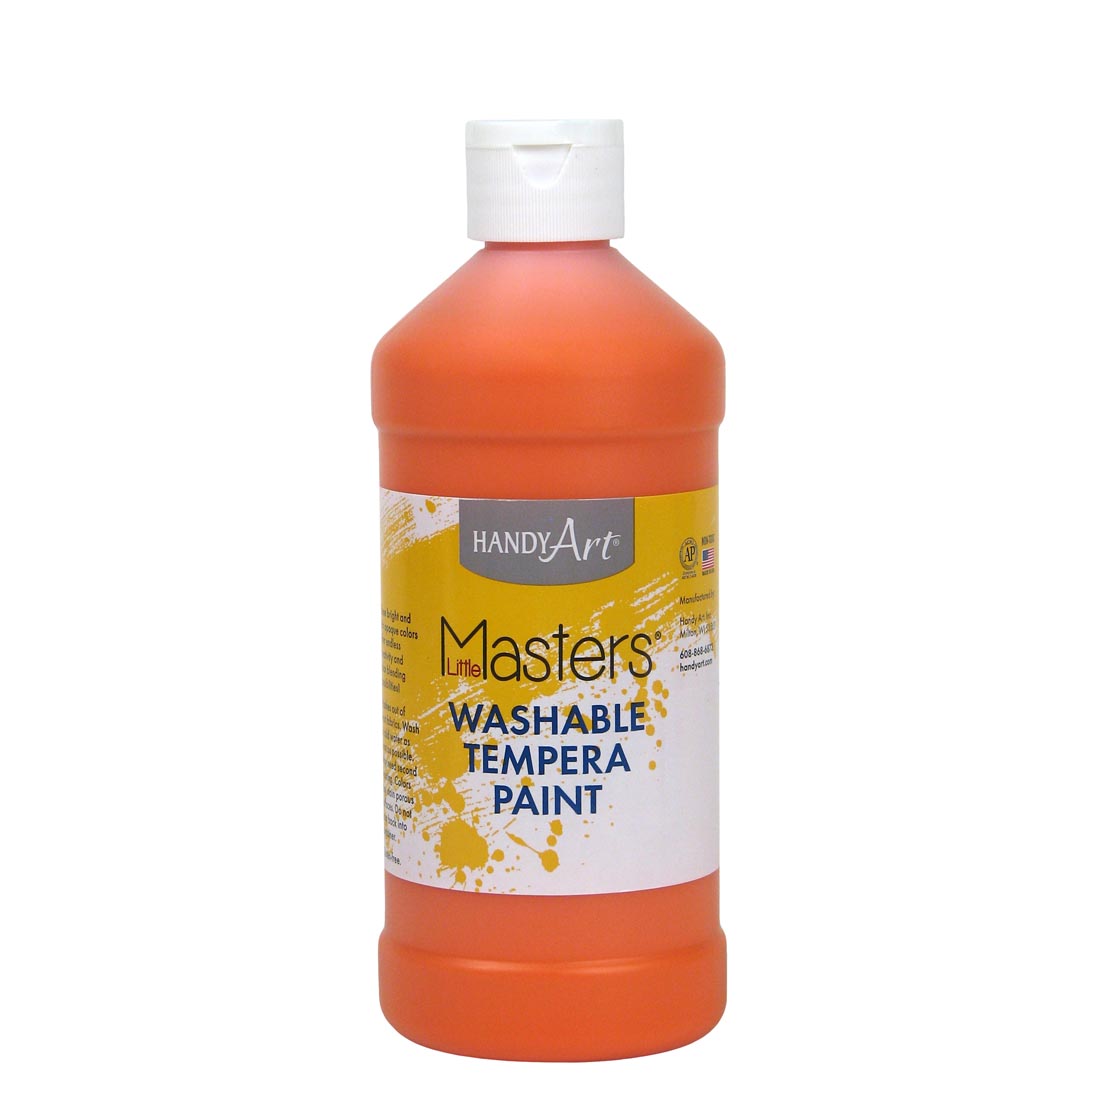 Pint bottle of Orange Handy Art Little Masters Washable Tempera Paint